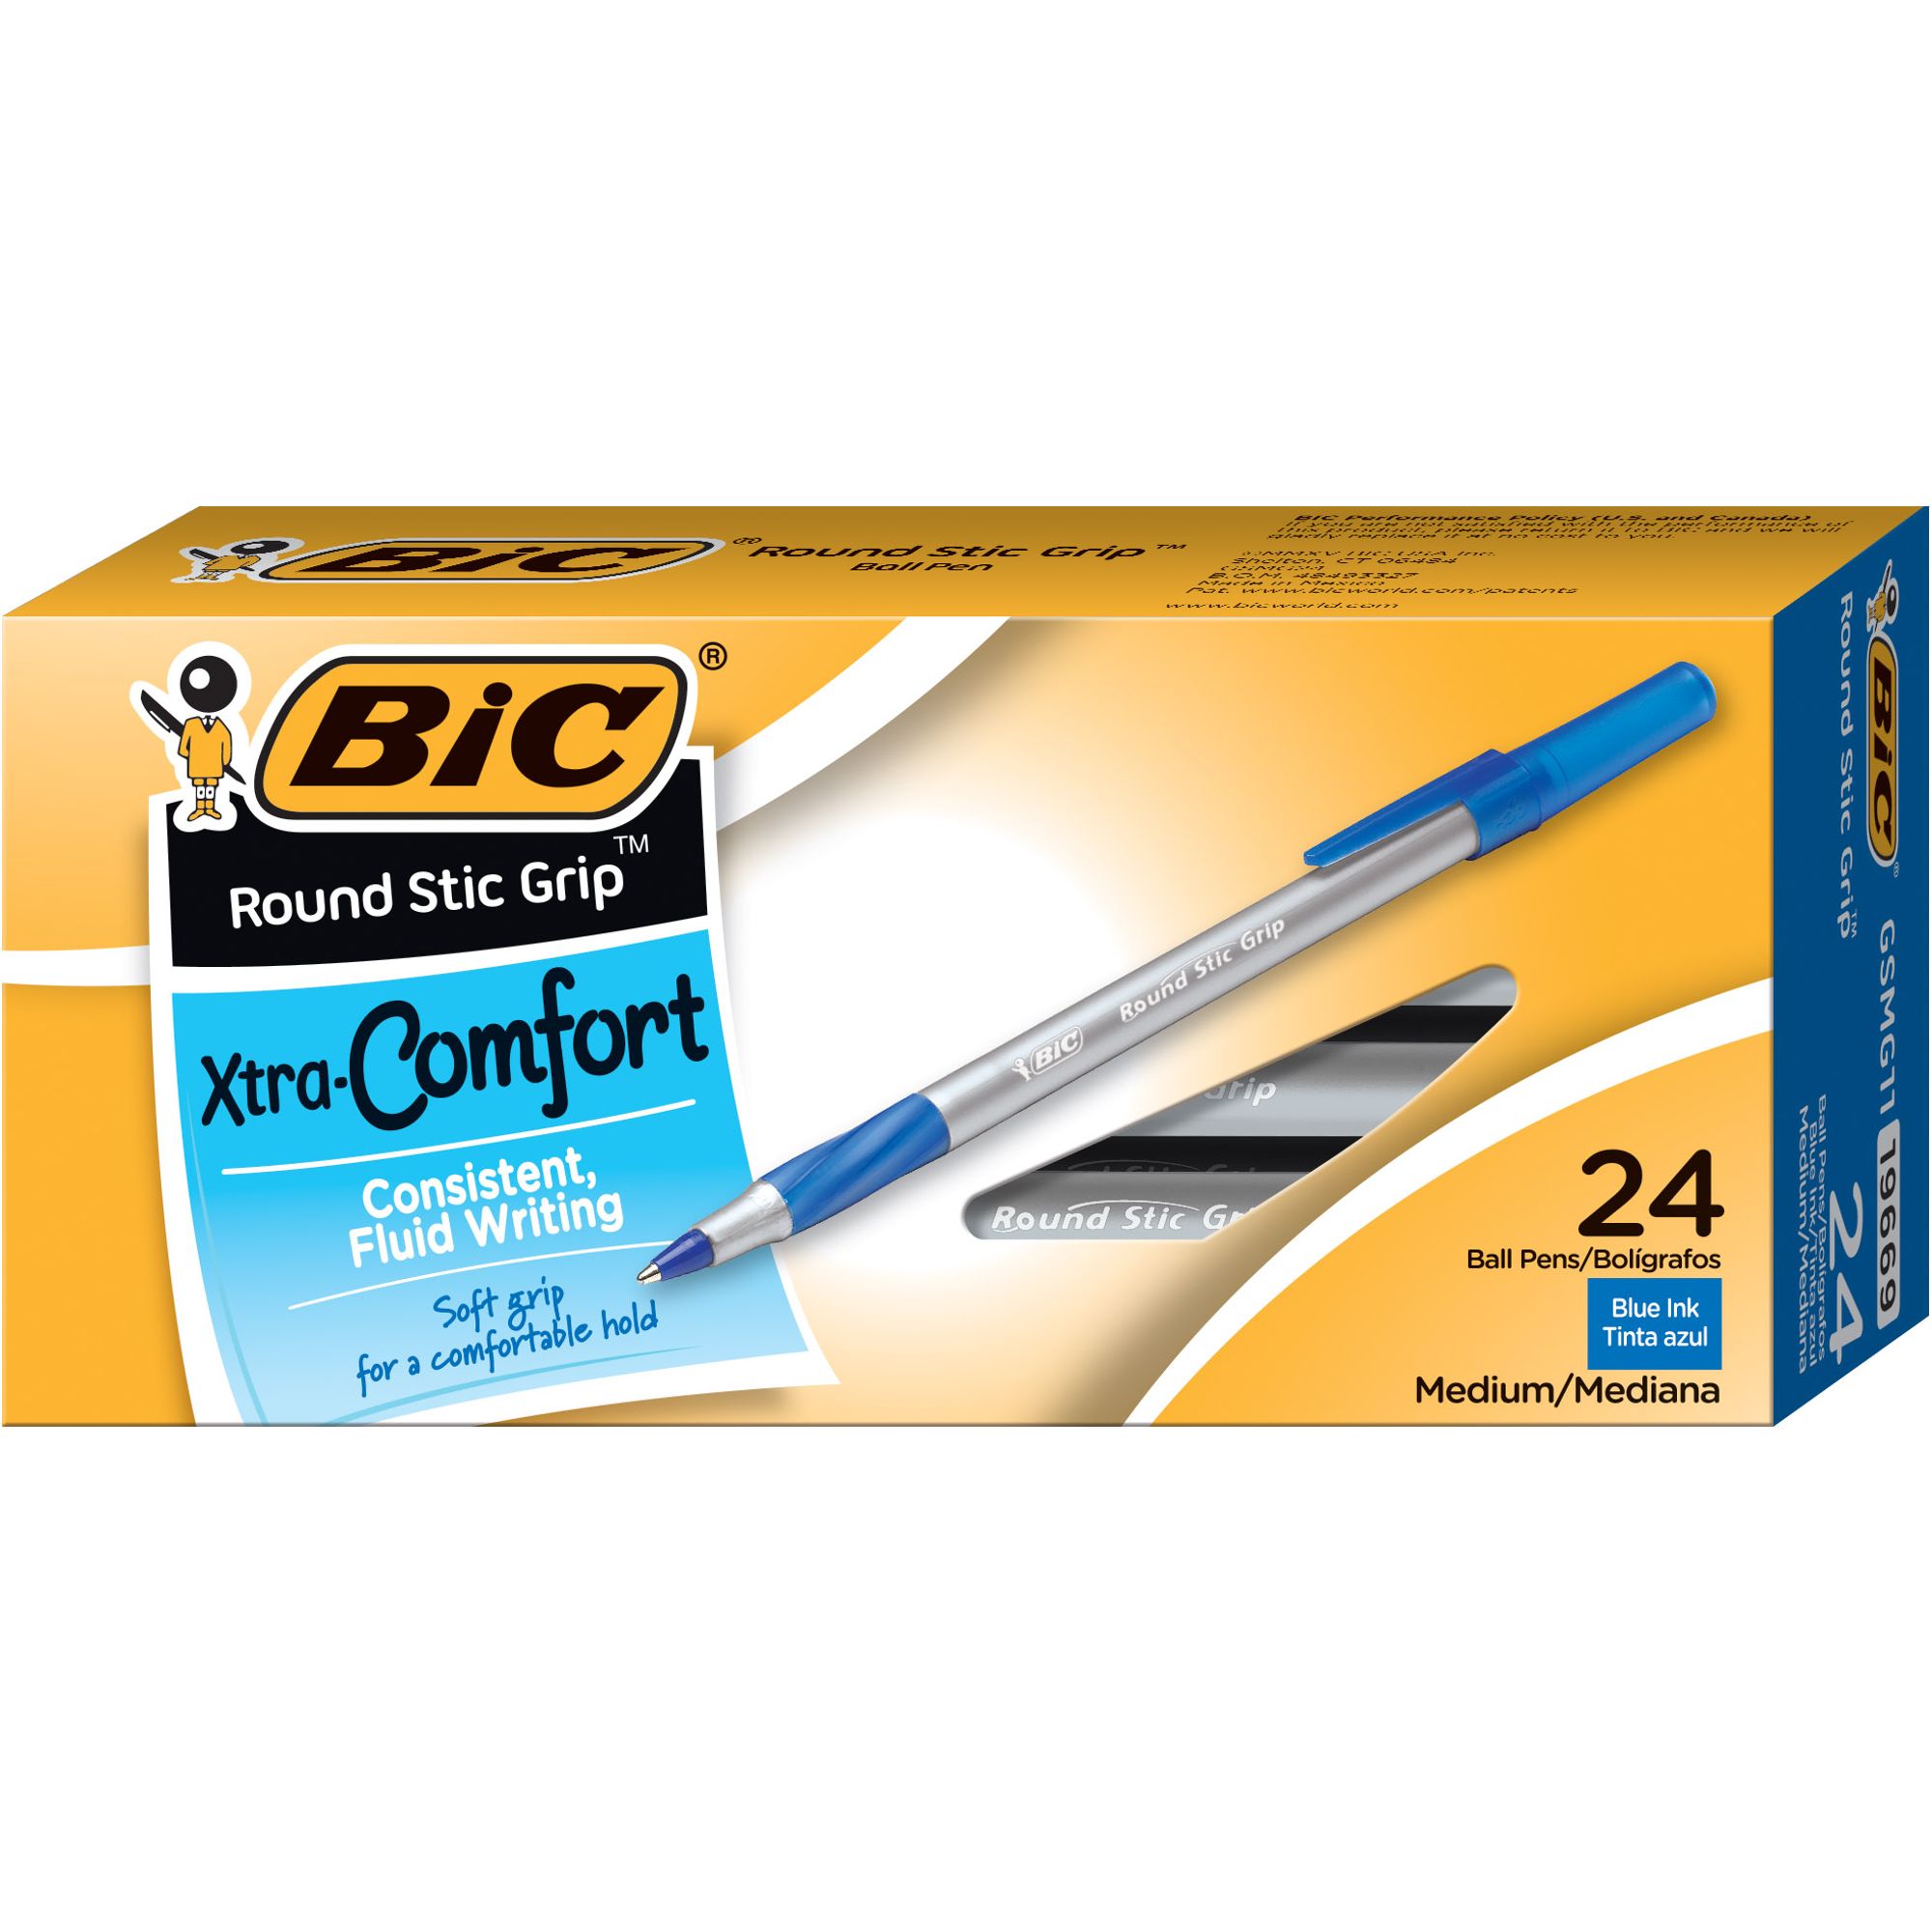 BIC Round Stic Grip Xtra Comfort Ball Pens Box of 24 Blue Pens $2.55 Walmart